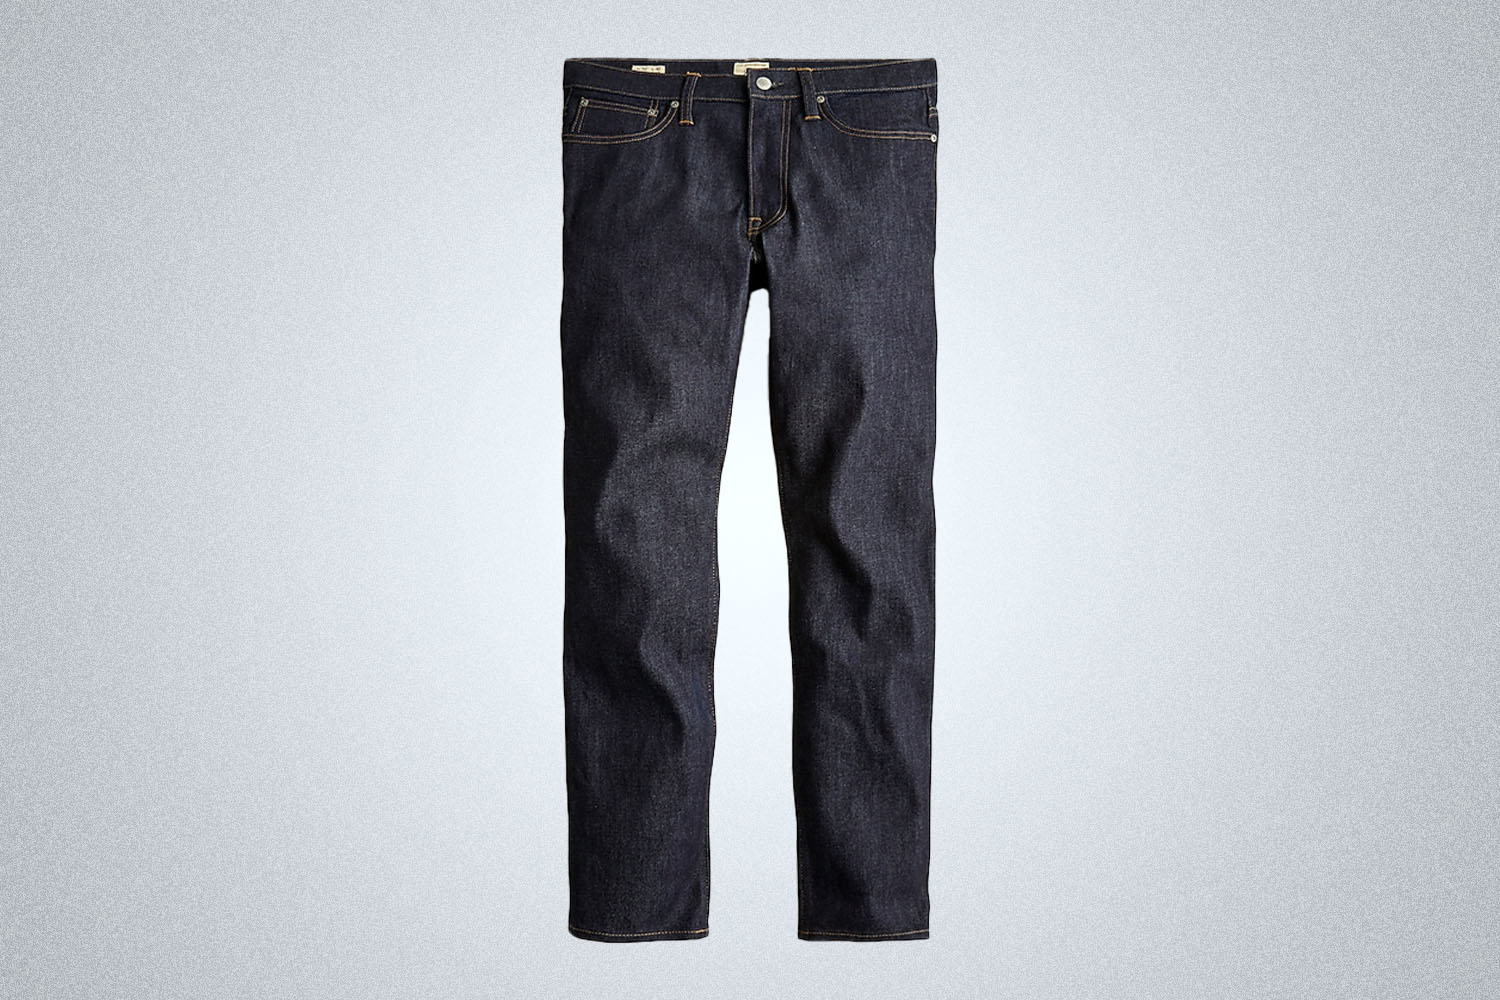 a pair of dark rinse denim jeans.